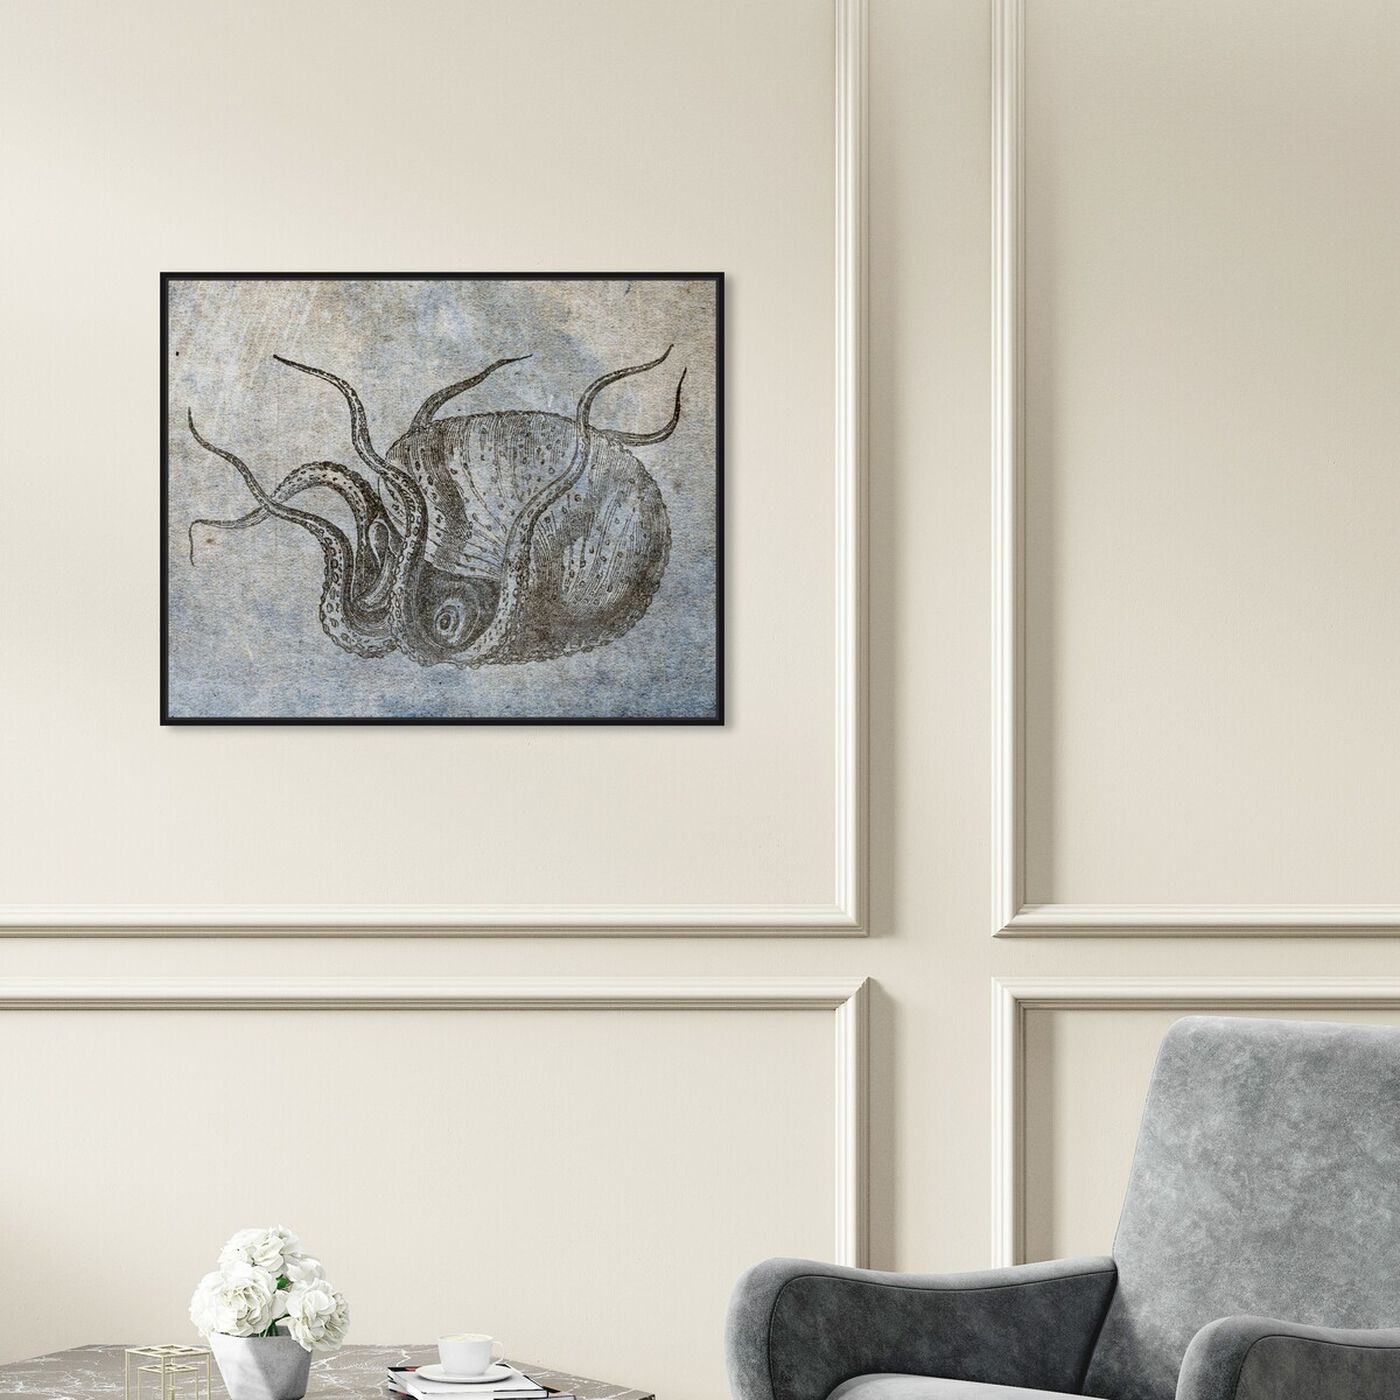 Hanging view of Nautilus featuring nautical and coastal and marine life art.